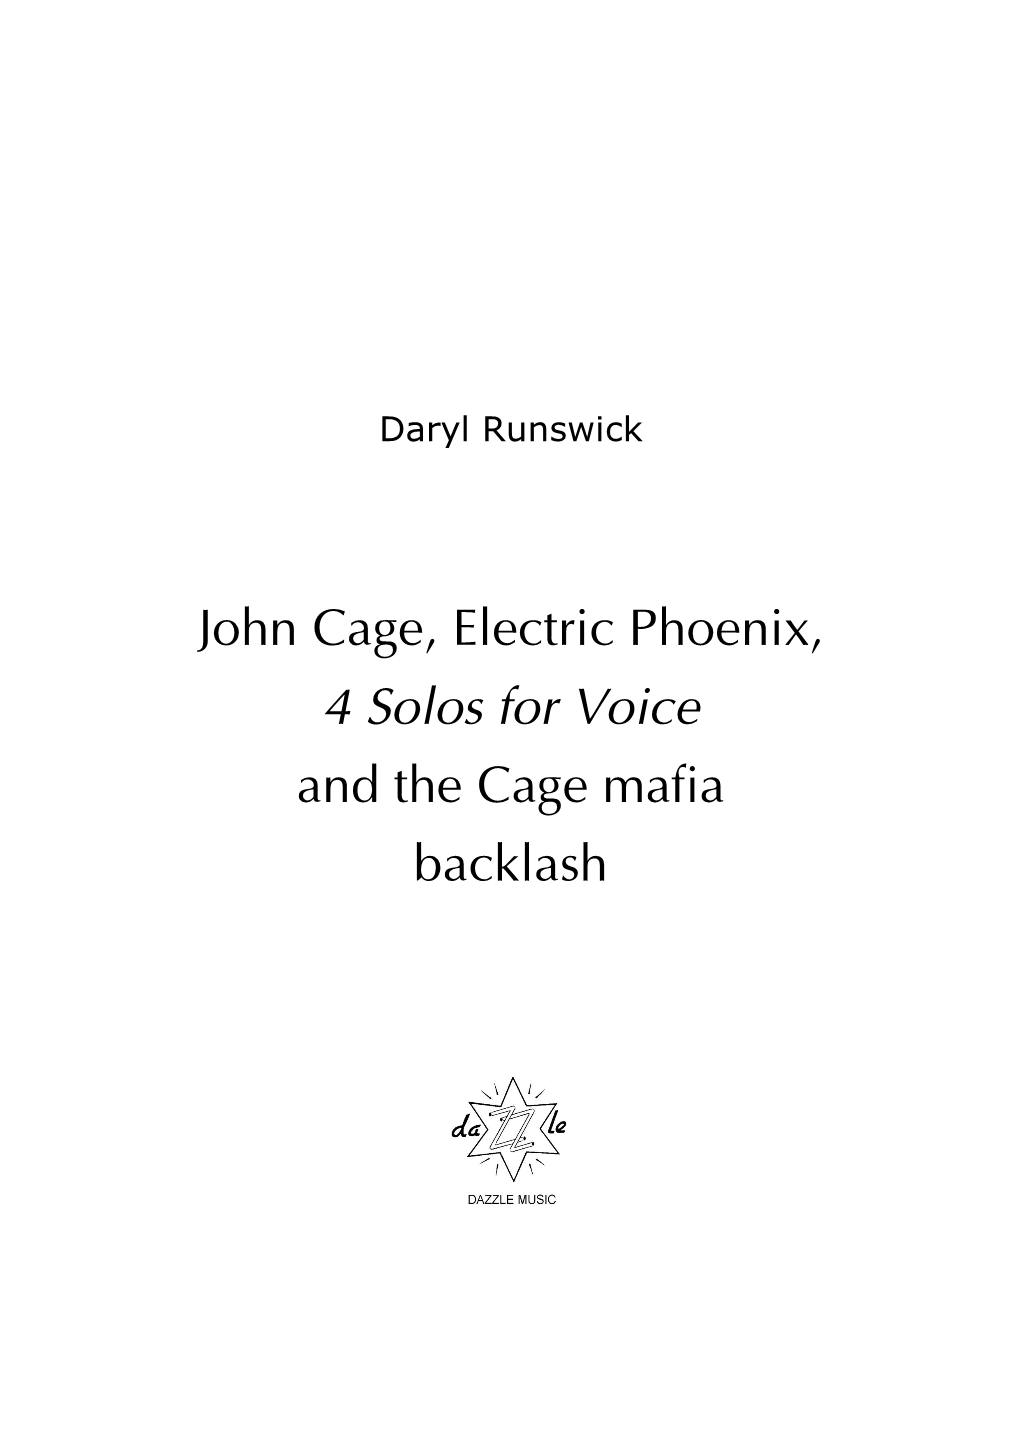 John Cage, Electric Phoenix, and the Cage Mafia Backlash